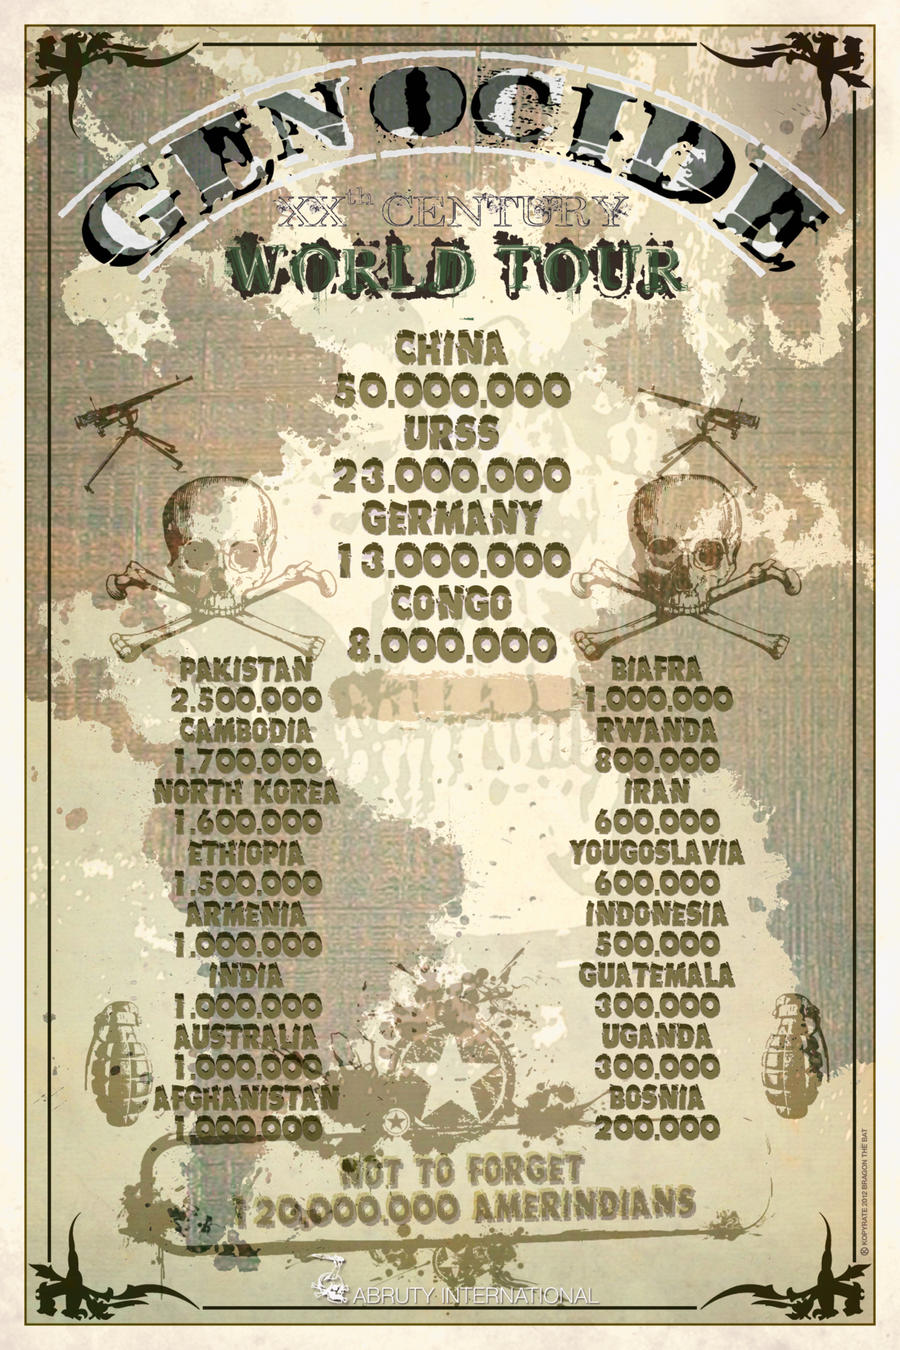 Genocide - World Tour